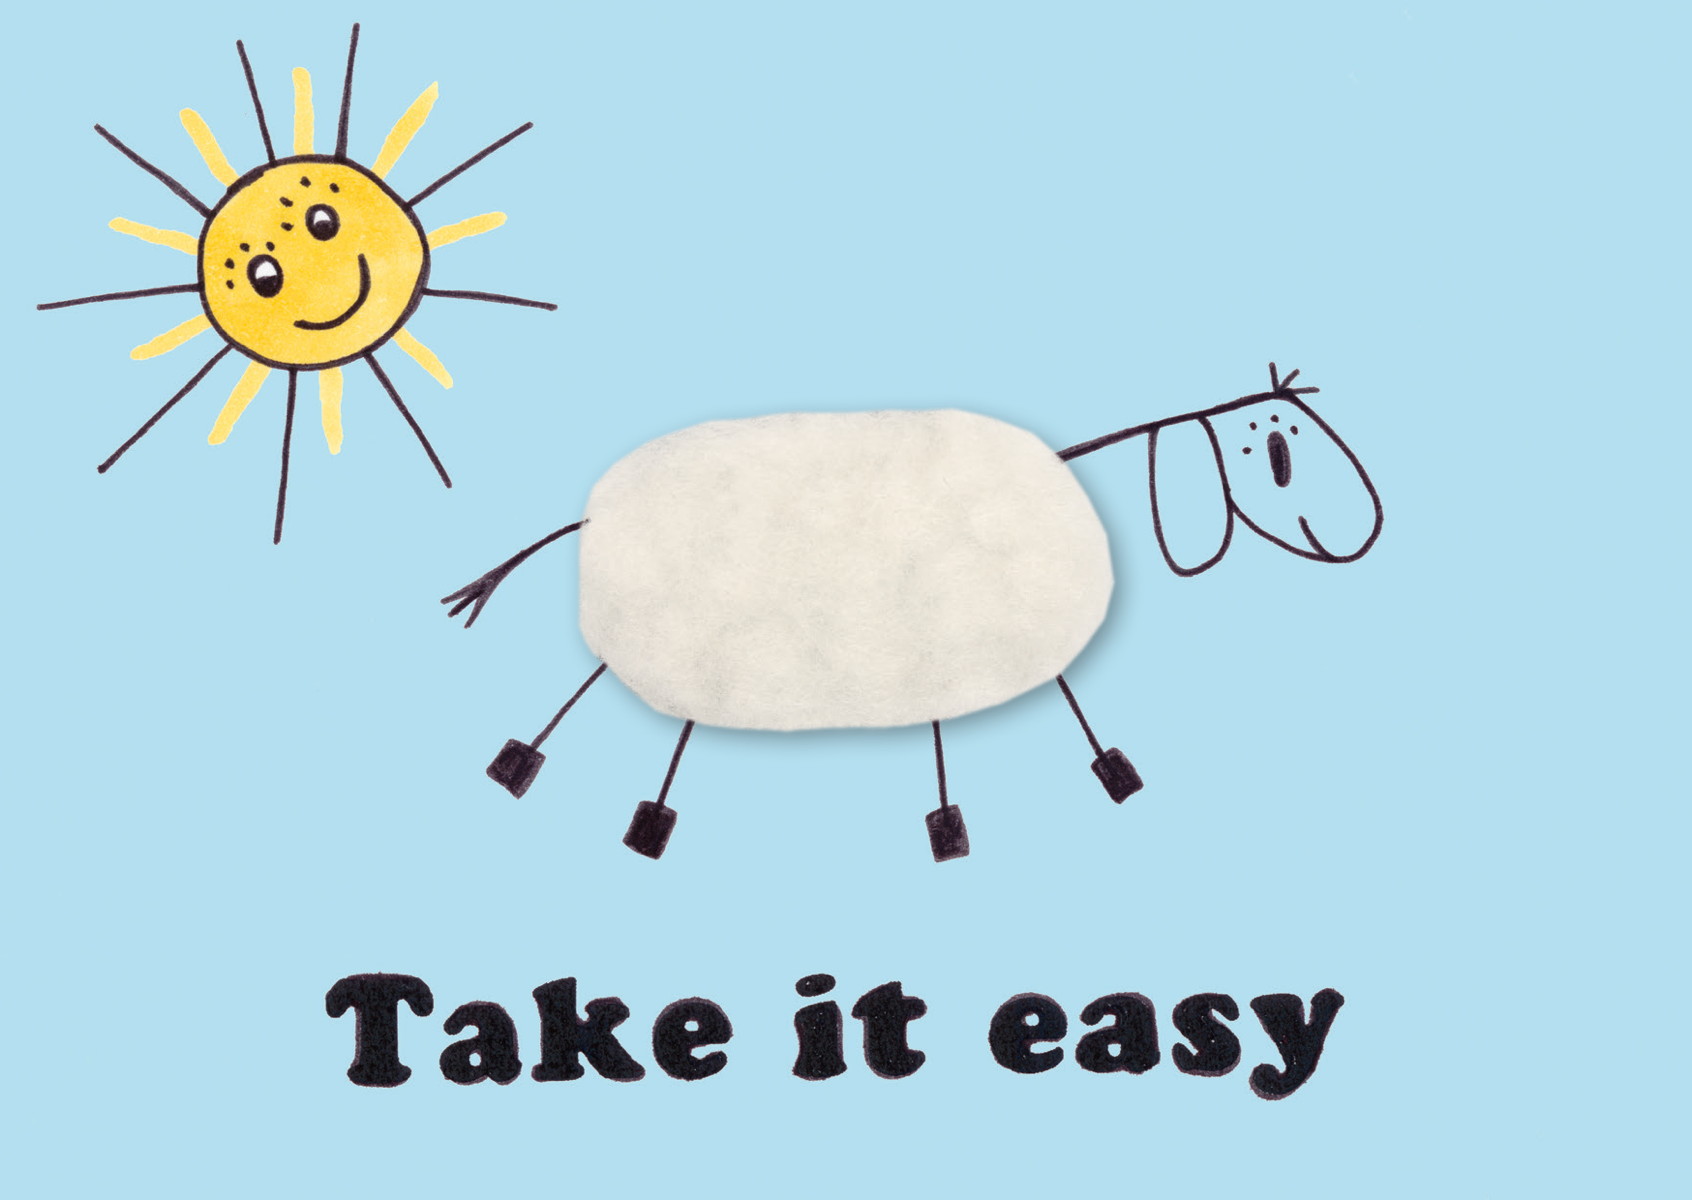 Plüschkarte "Take it easy"